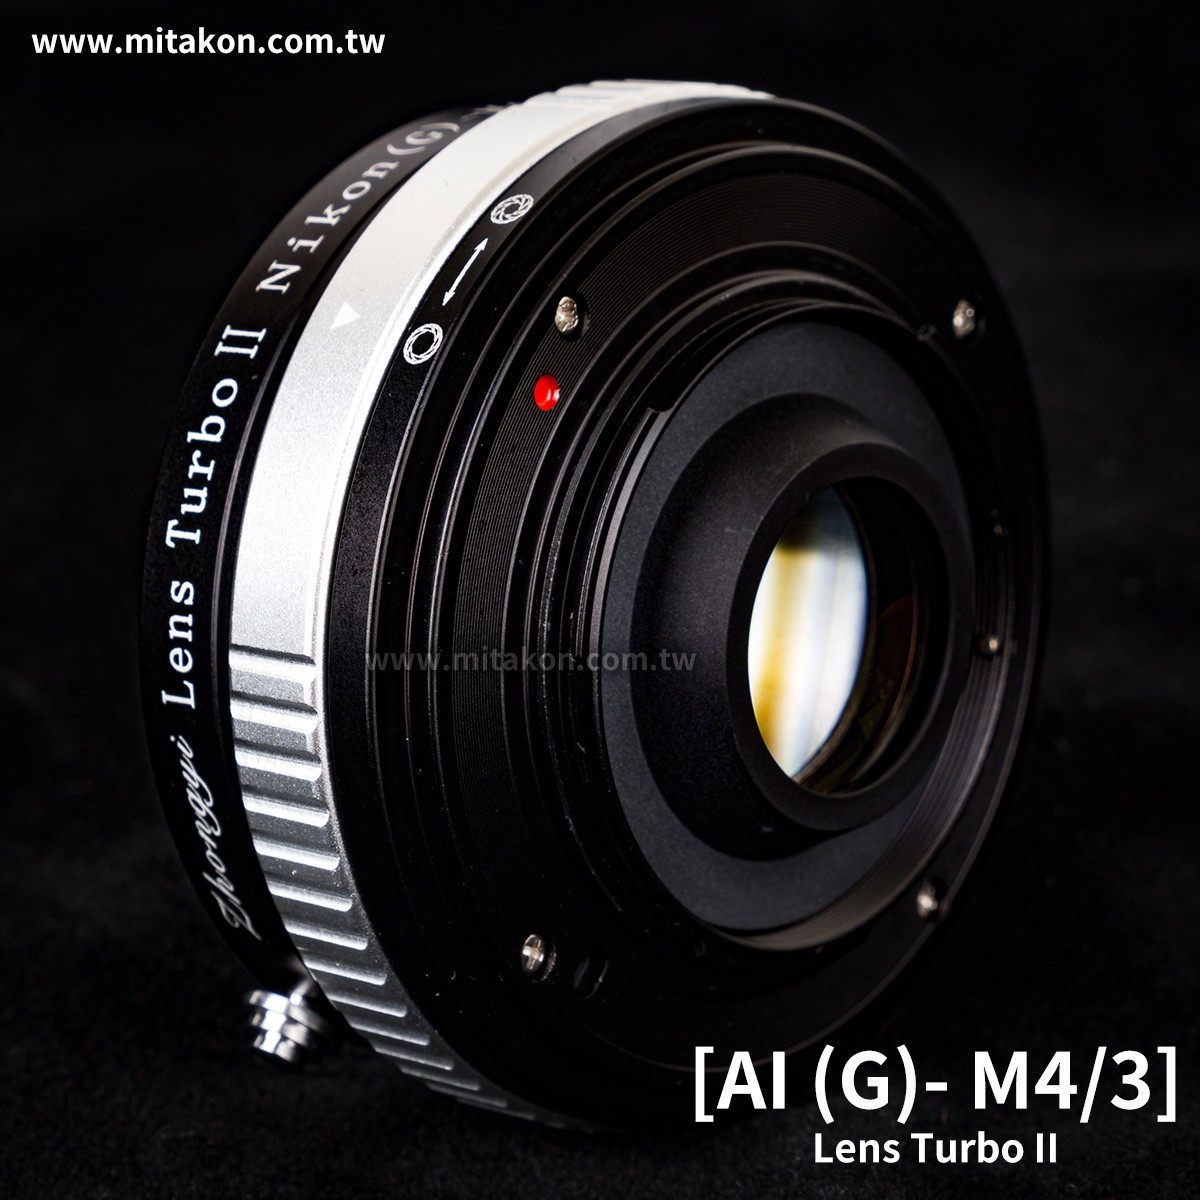 減焦環 2代 Lens Turbo II Nikon Ai(G) -M4/3 MFT